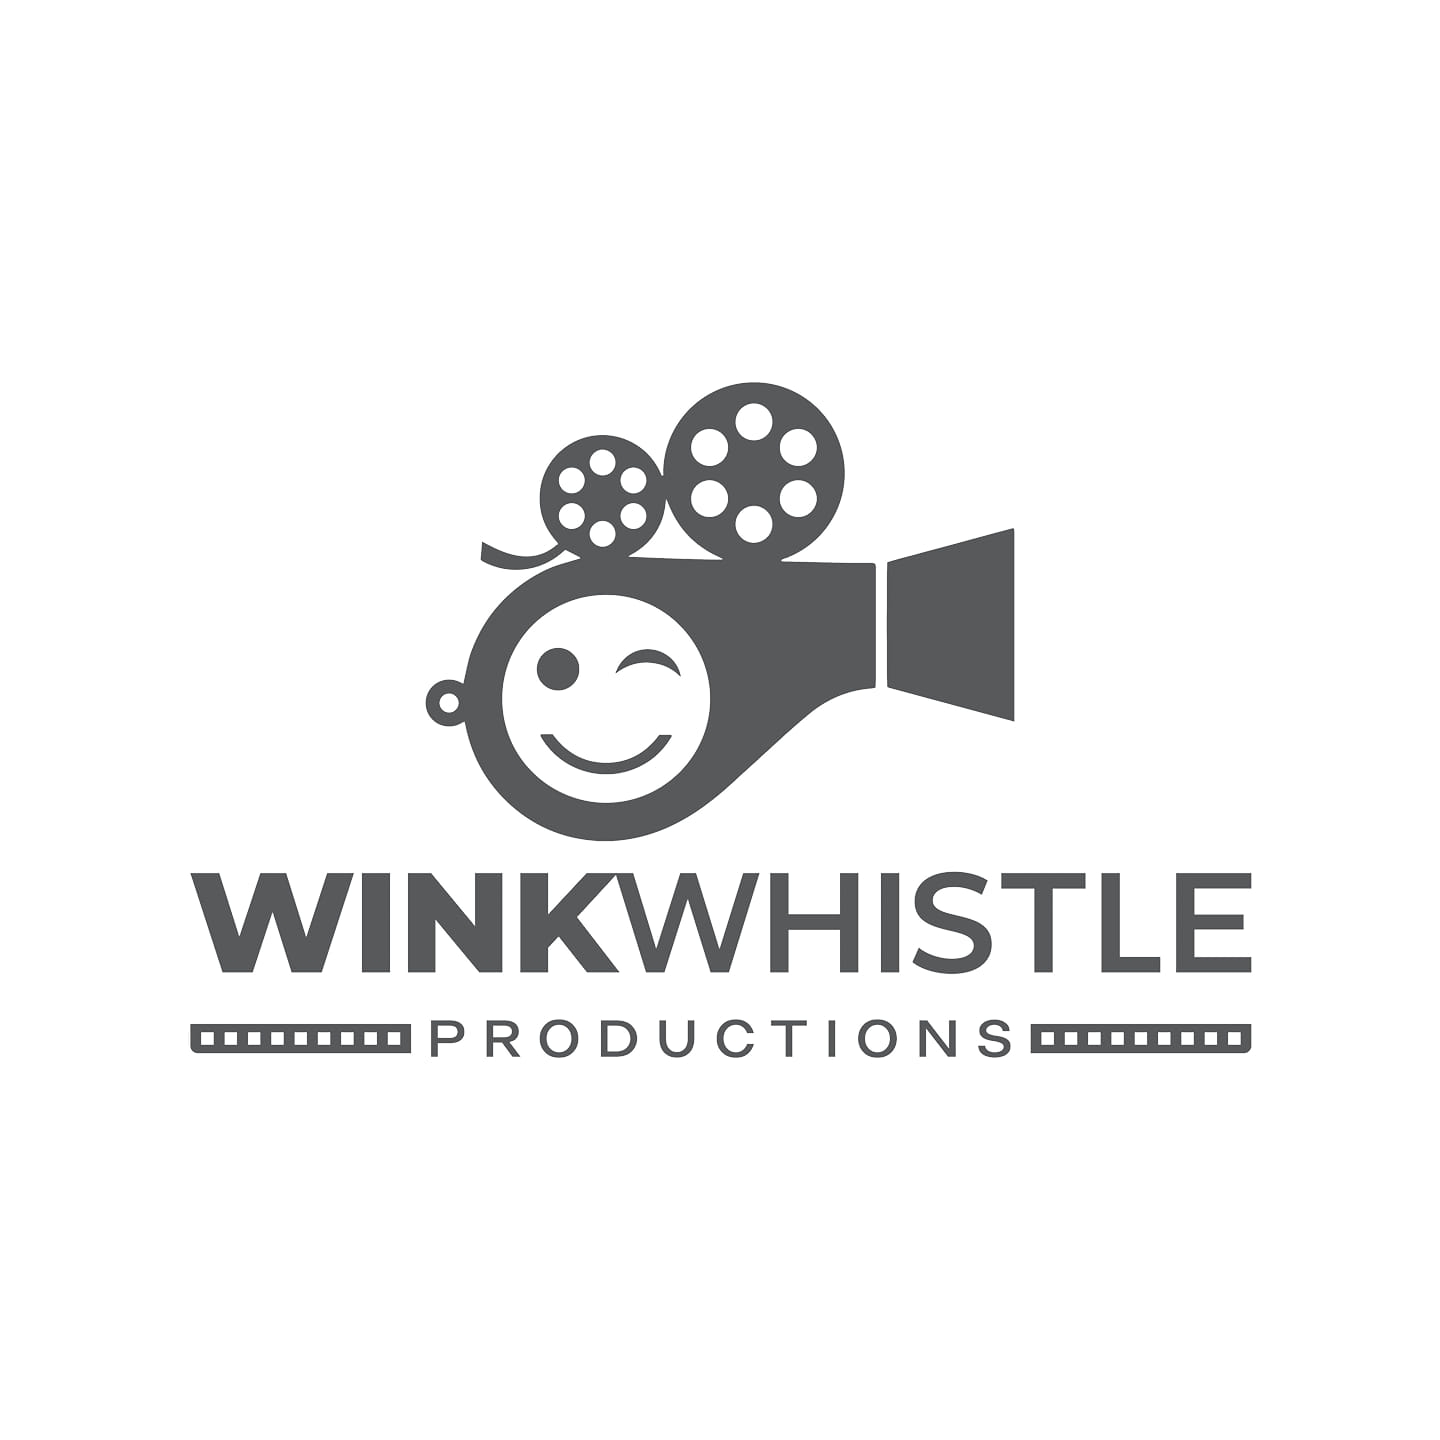 Winkwhistle Productions